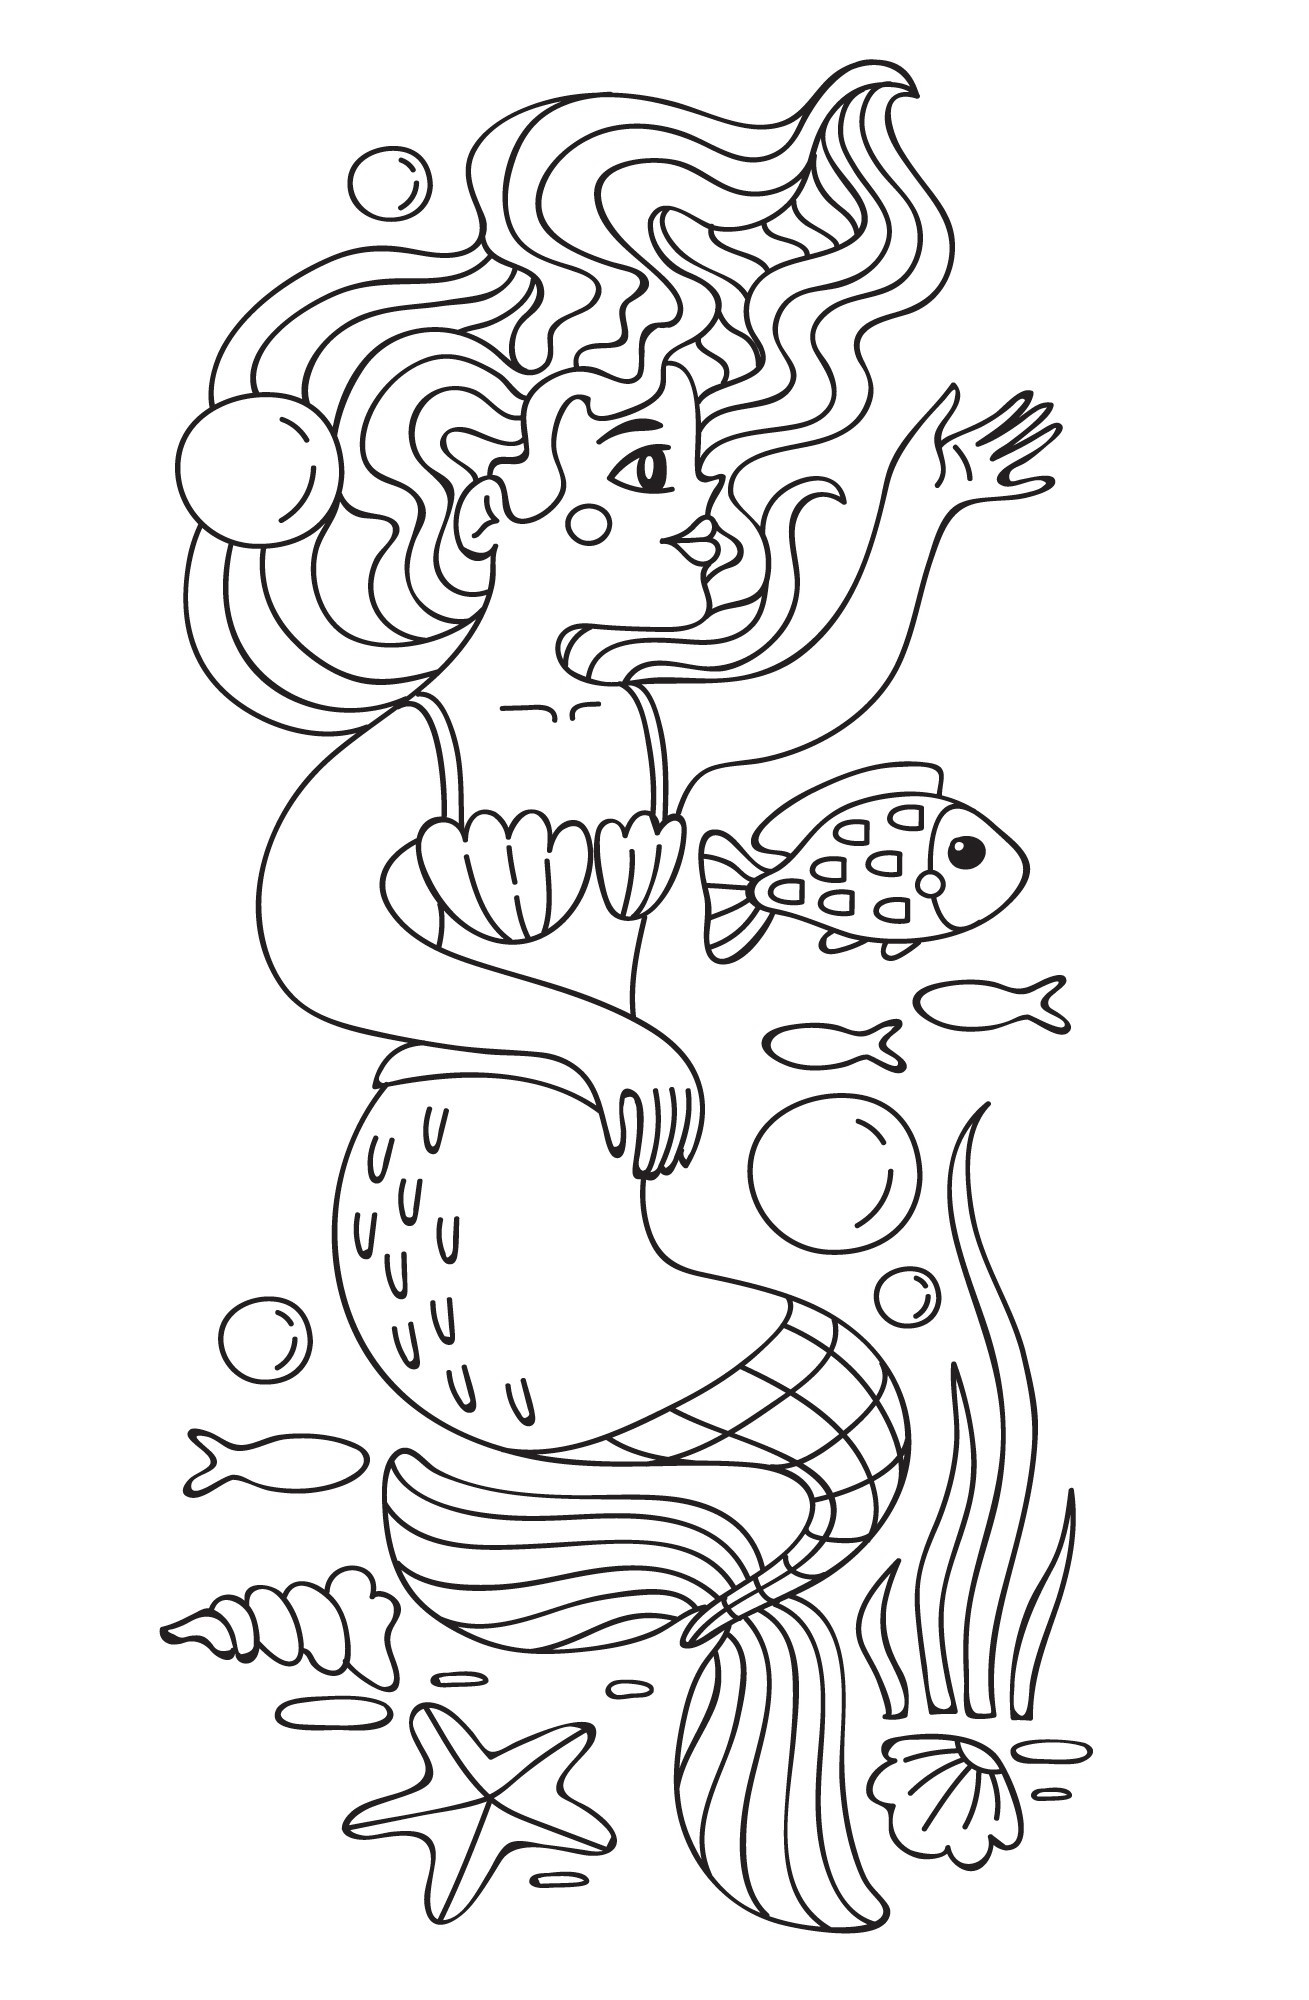 Раскраска для детей: русалка «Танец с морскими волнами»